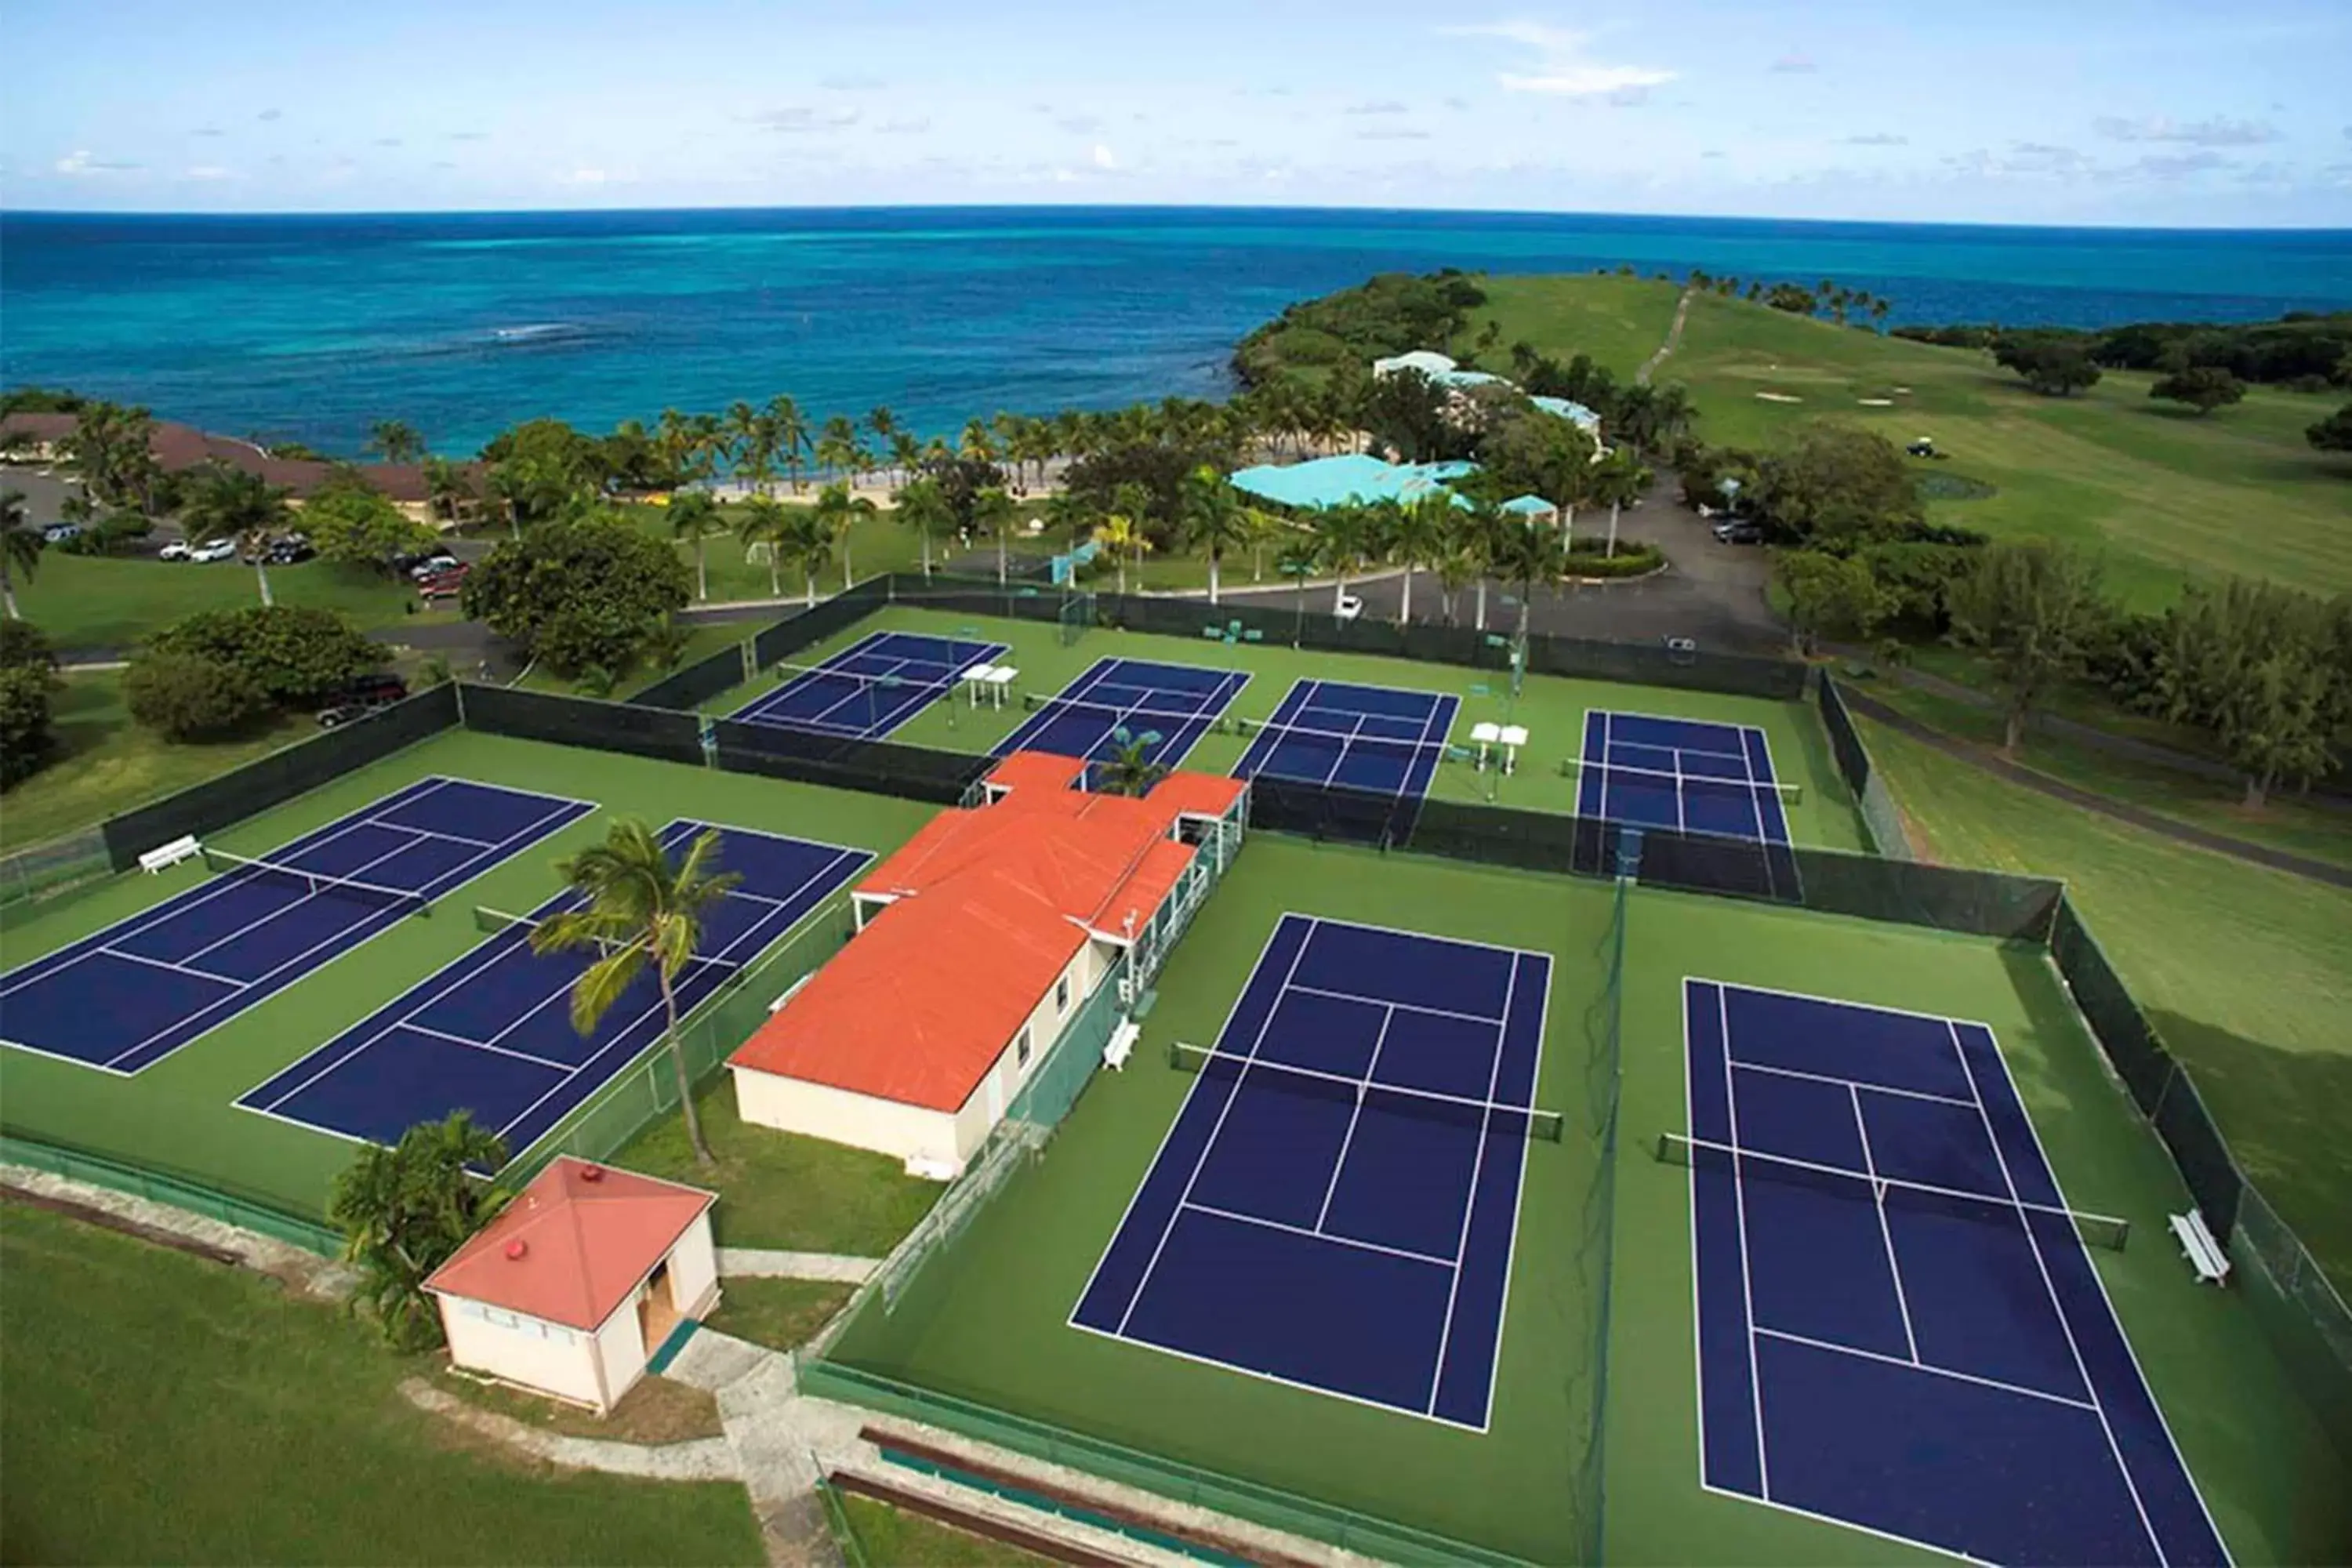 Tennis court, Bird's-eye View in The Buccaneer Beach & Golf Resort